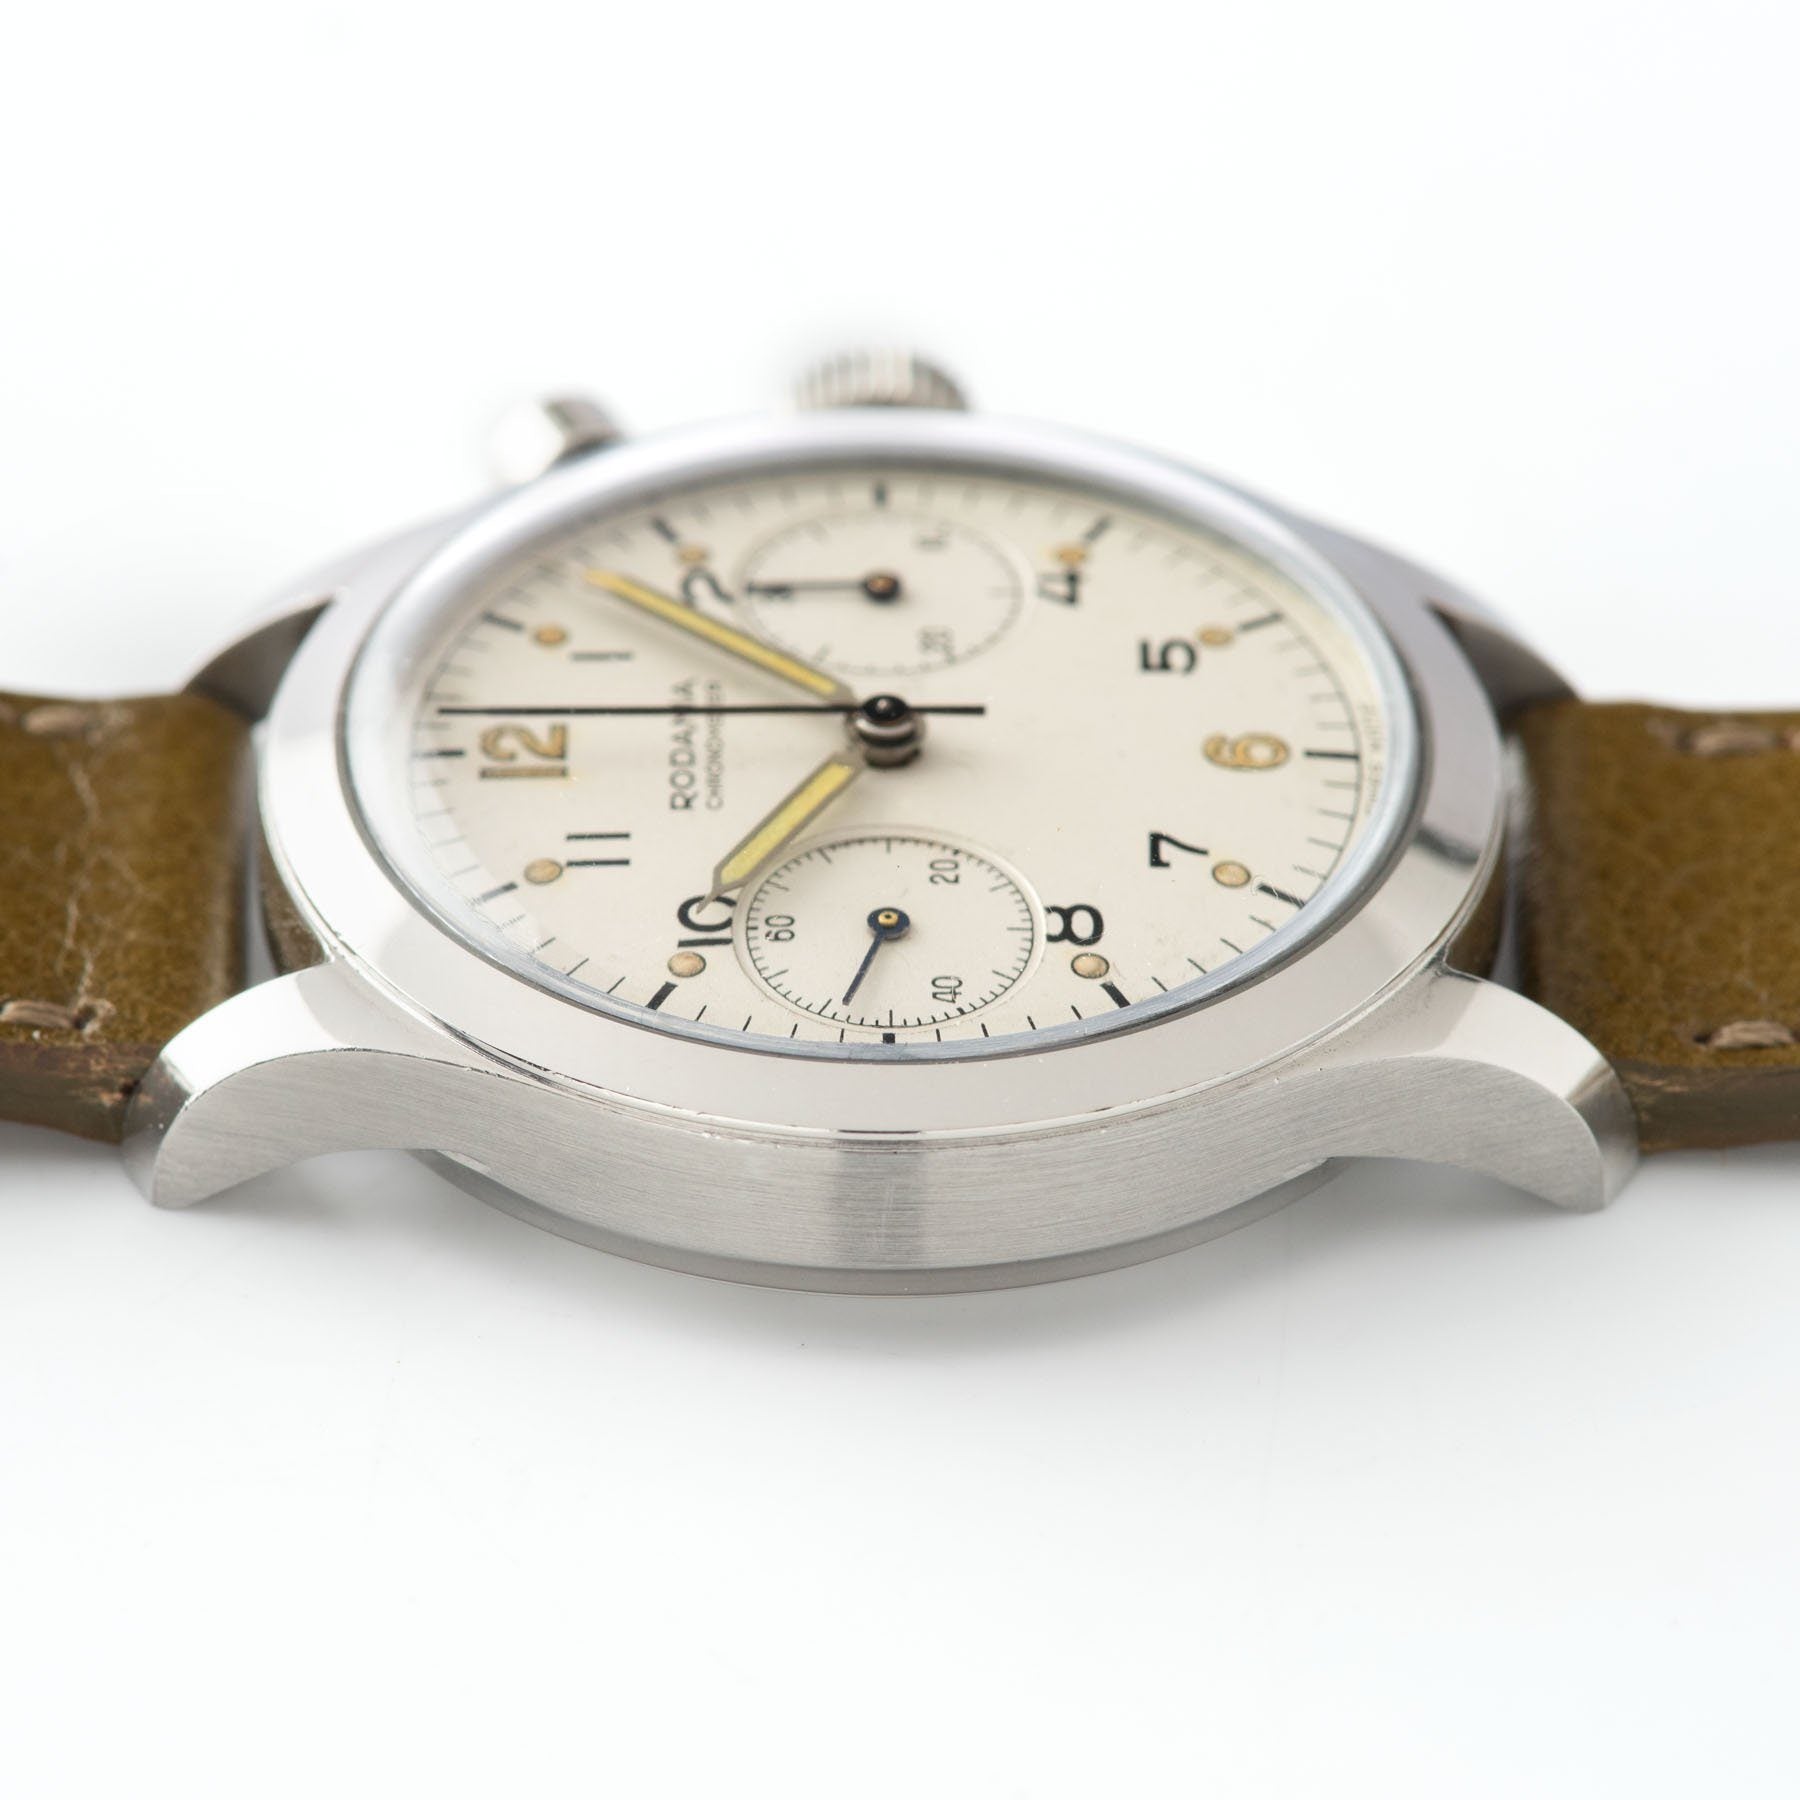 Rodania Mono Pusher Chronograph Watch 1960s